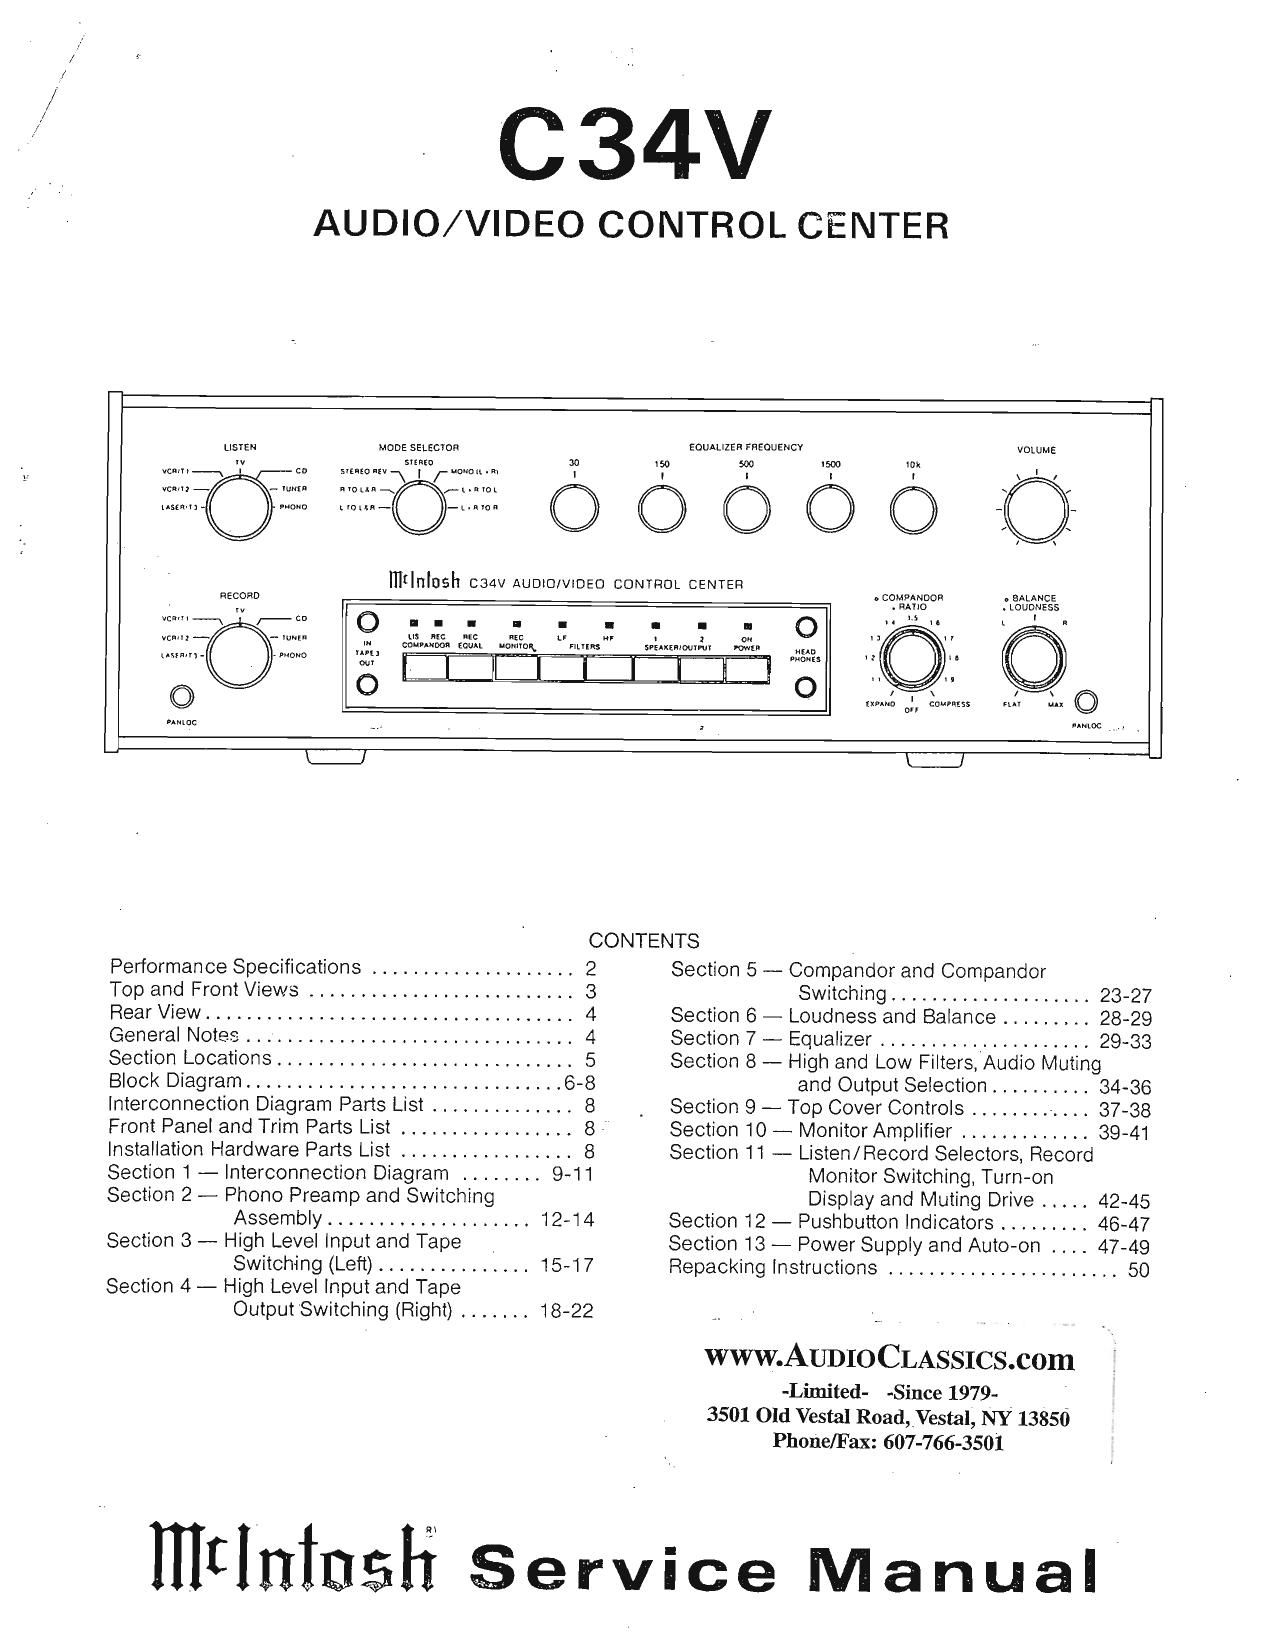 McIntosh C 34 V Service Manual